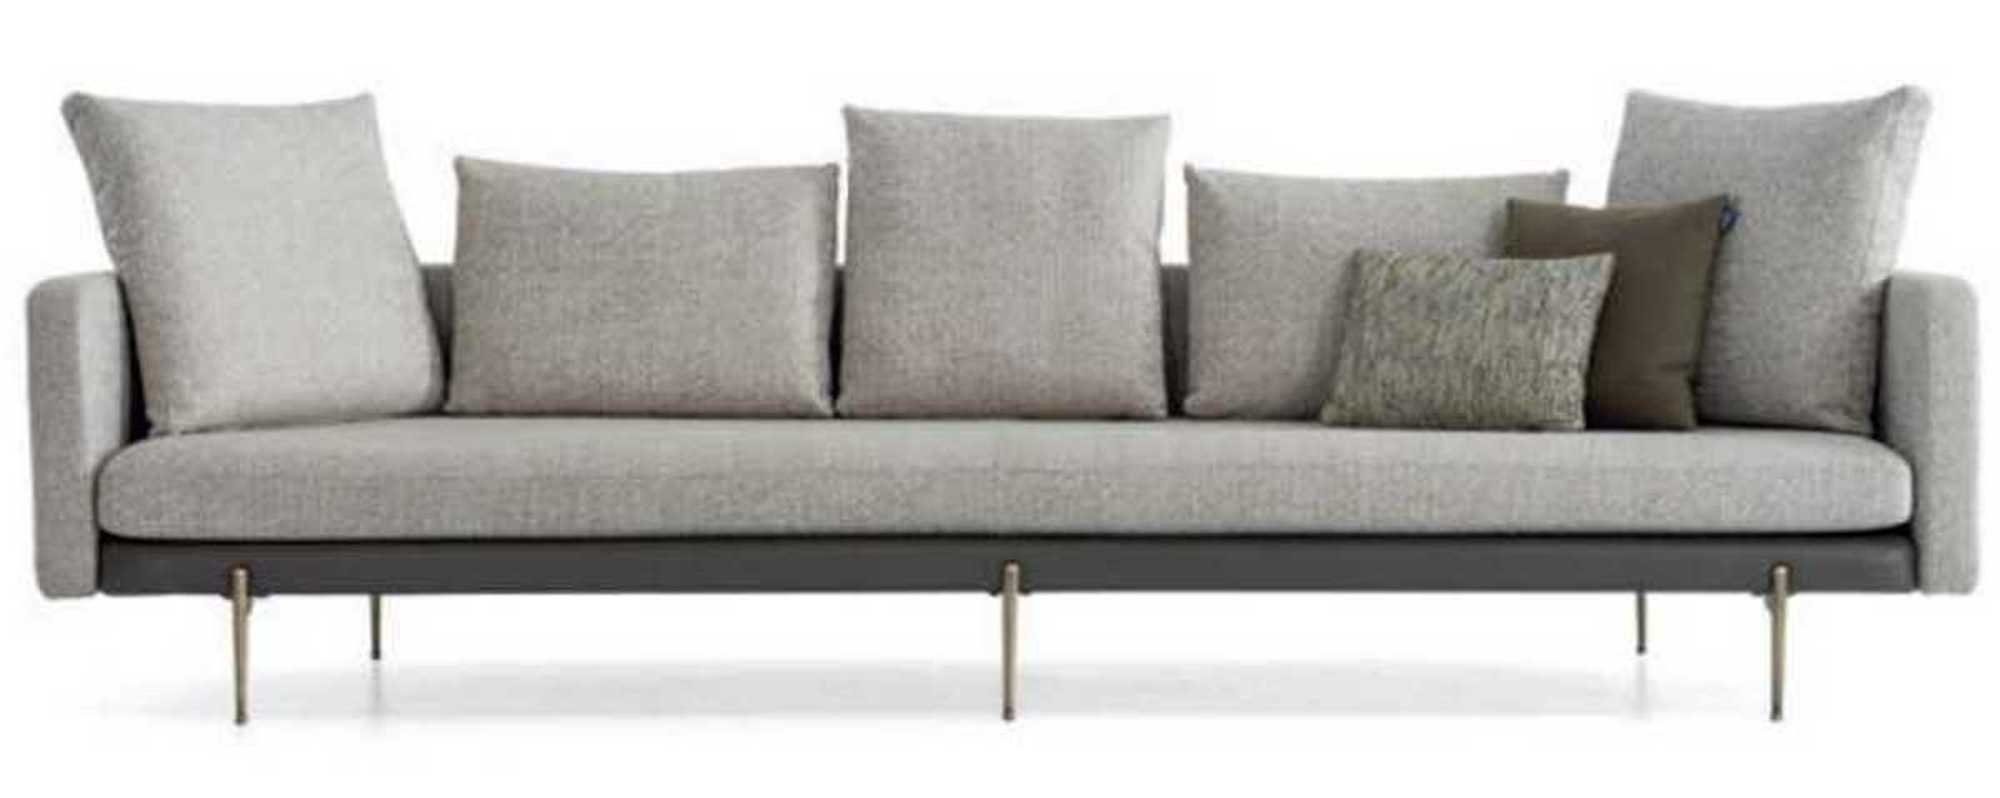 JVmoebel Sofa Luxus Sofa Grau Farbe Wohnzimmer Polster Textil 5 sitzer, 1 Teile, Made in Europa